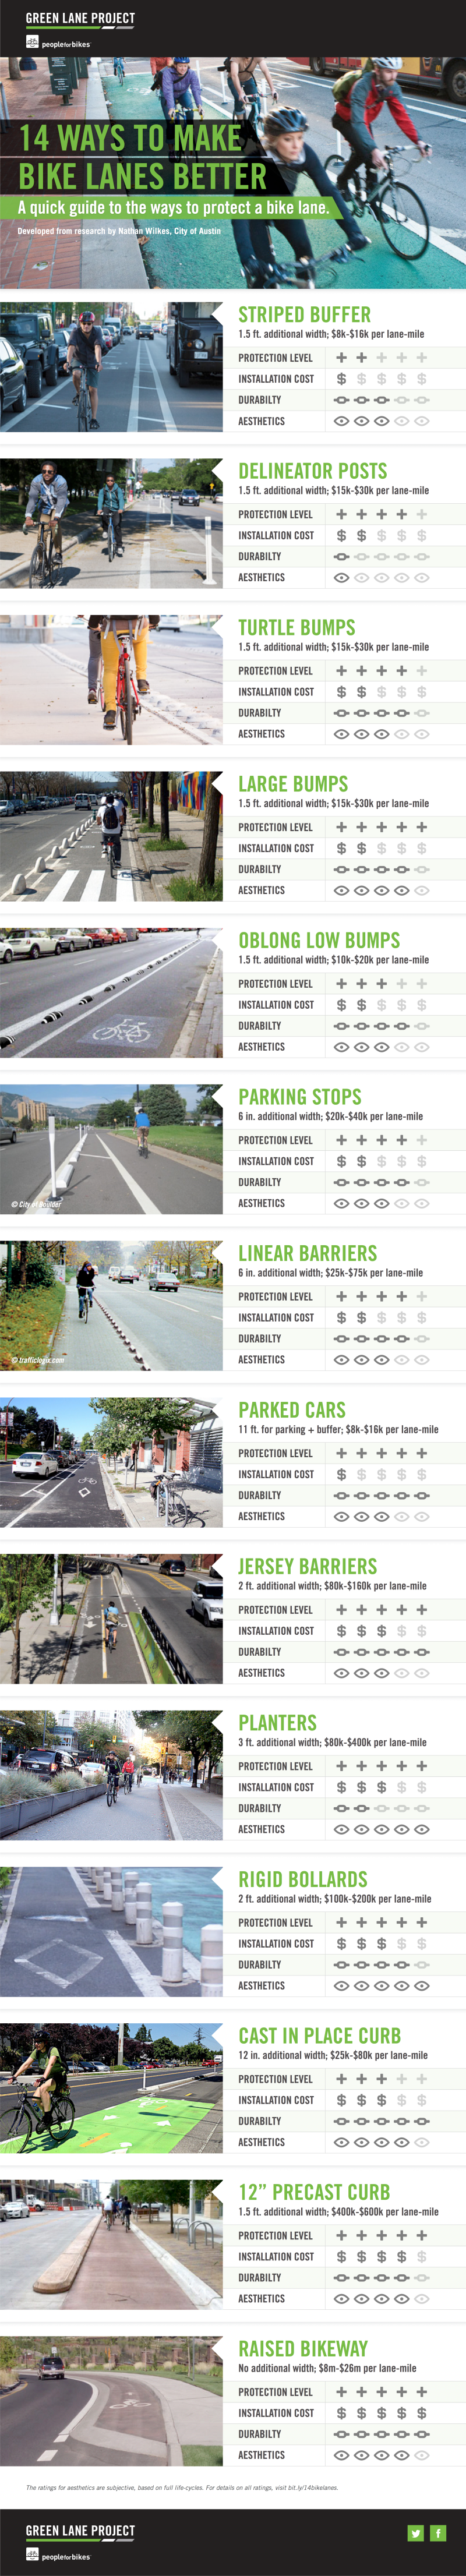 14 Ways to Make Bike Lanes Better - People for Bikes